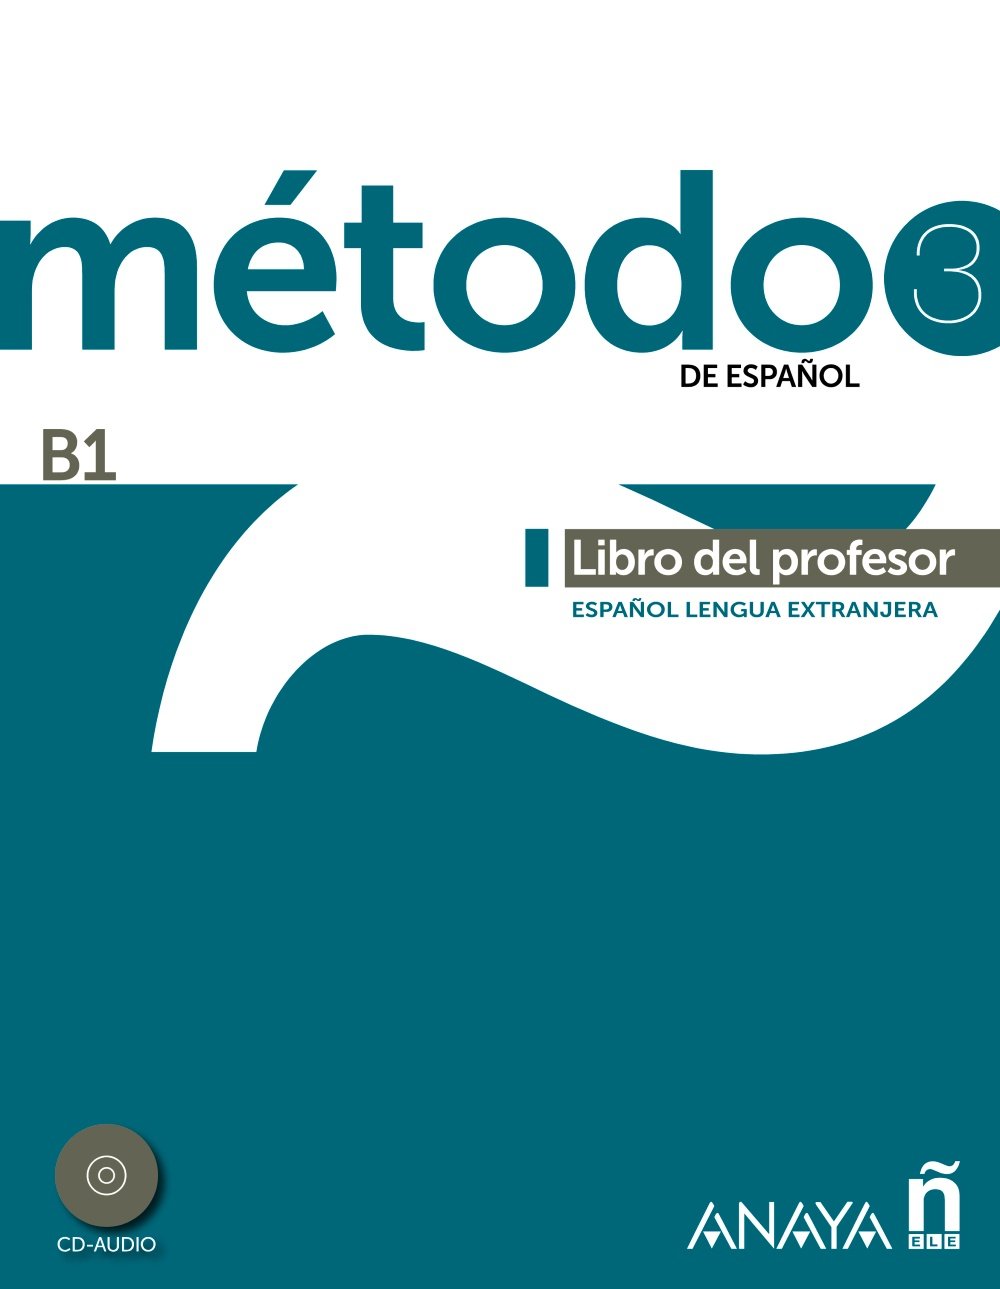 Metodo de espanol 3 Libro del profesor + Audio CD / Книга для учителя